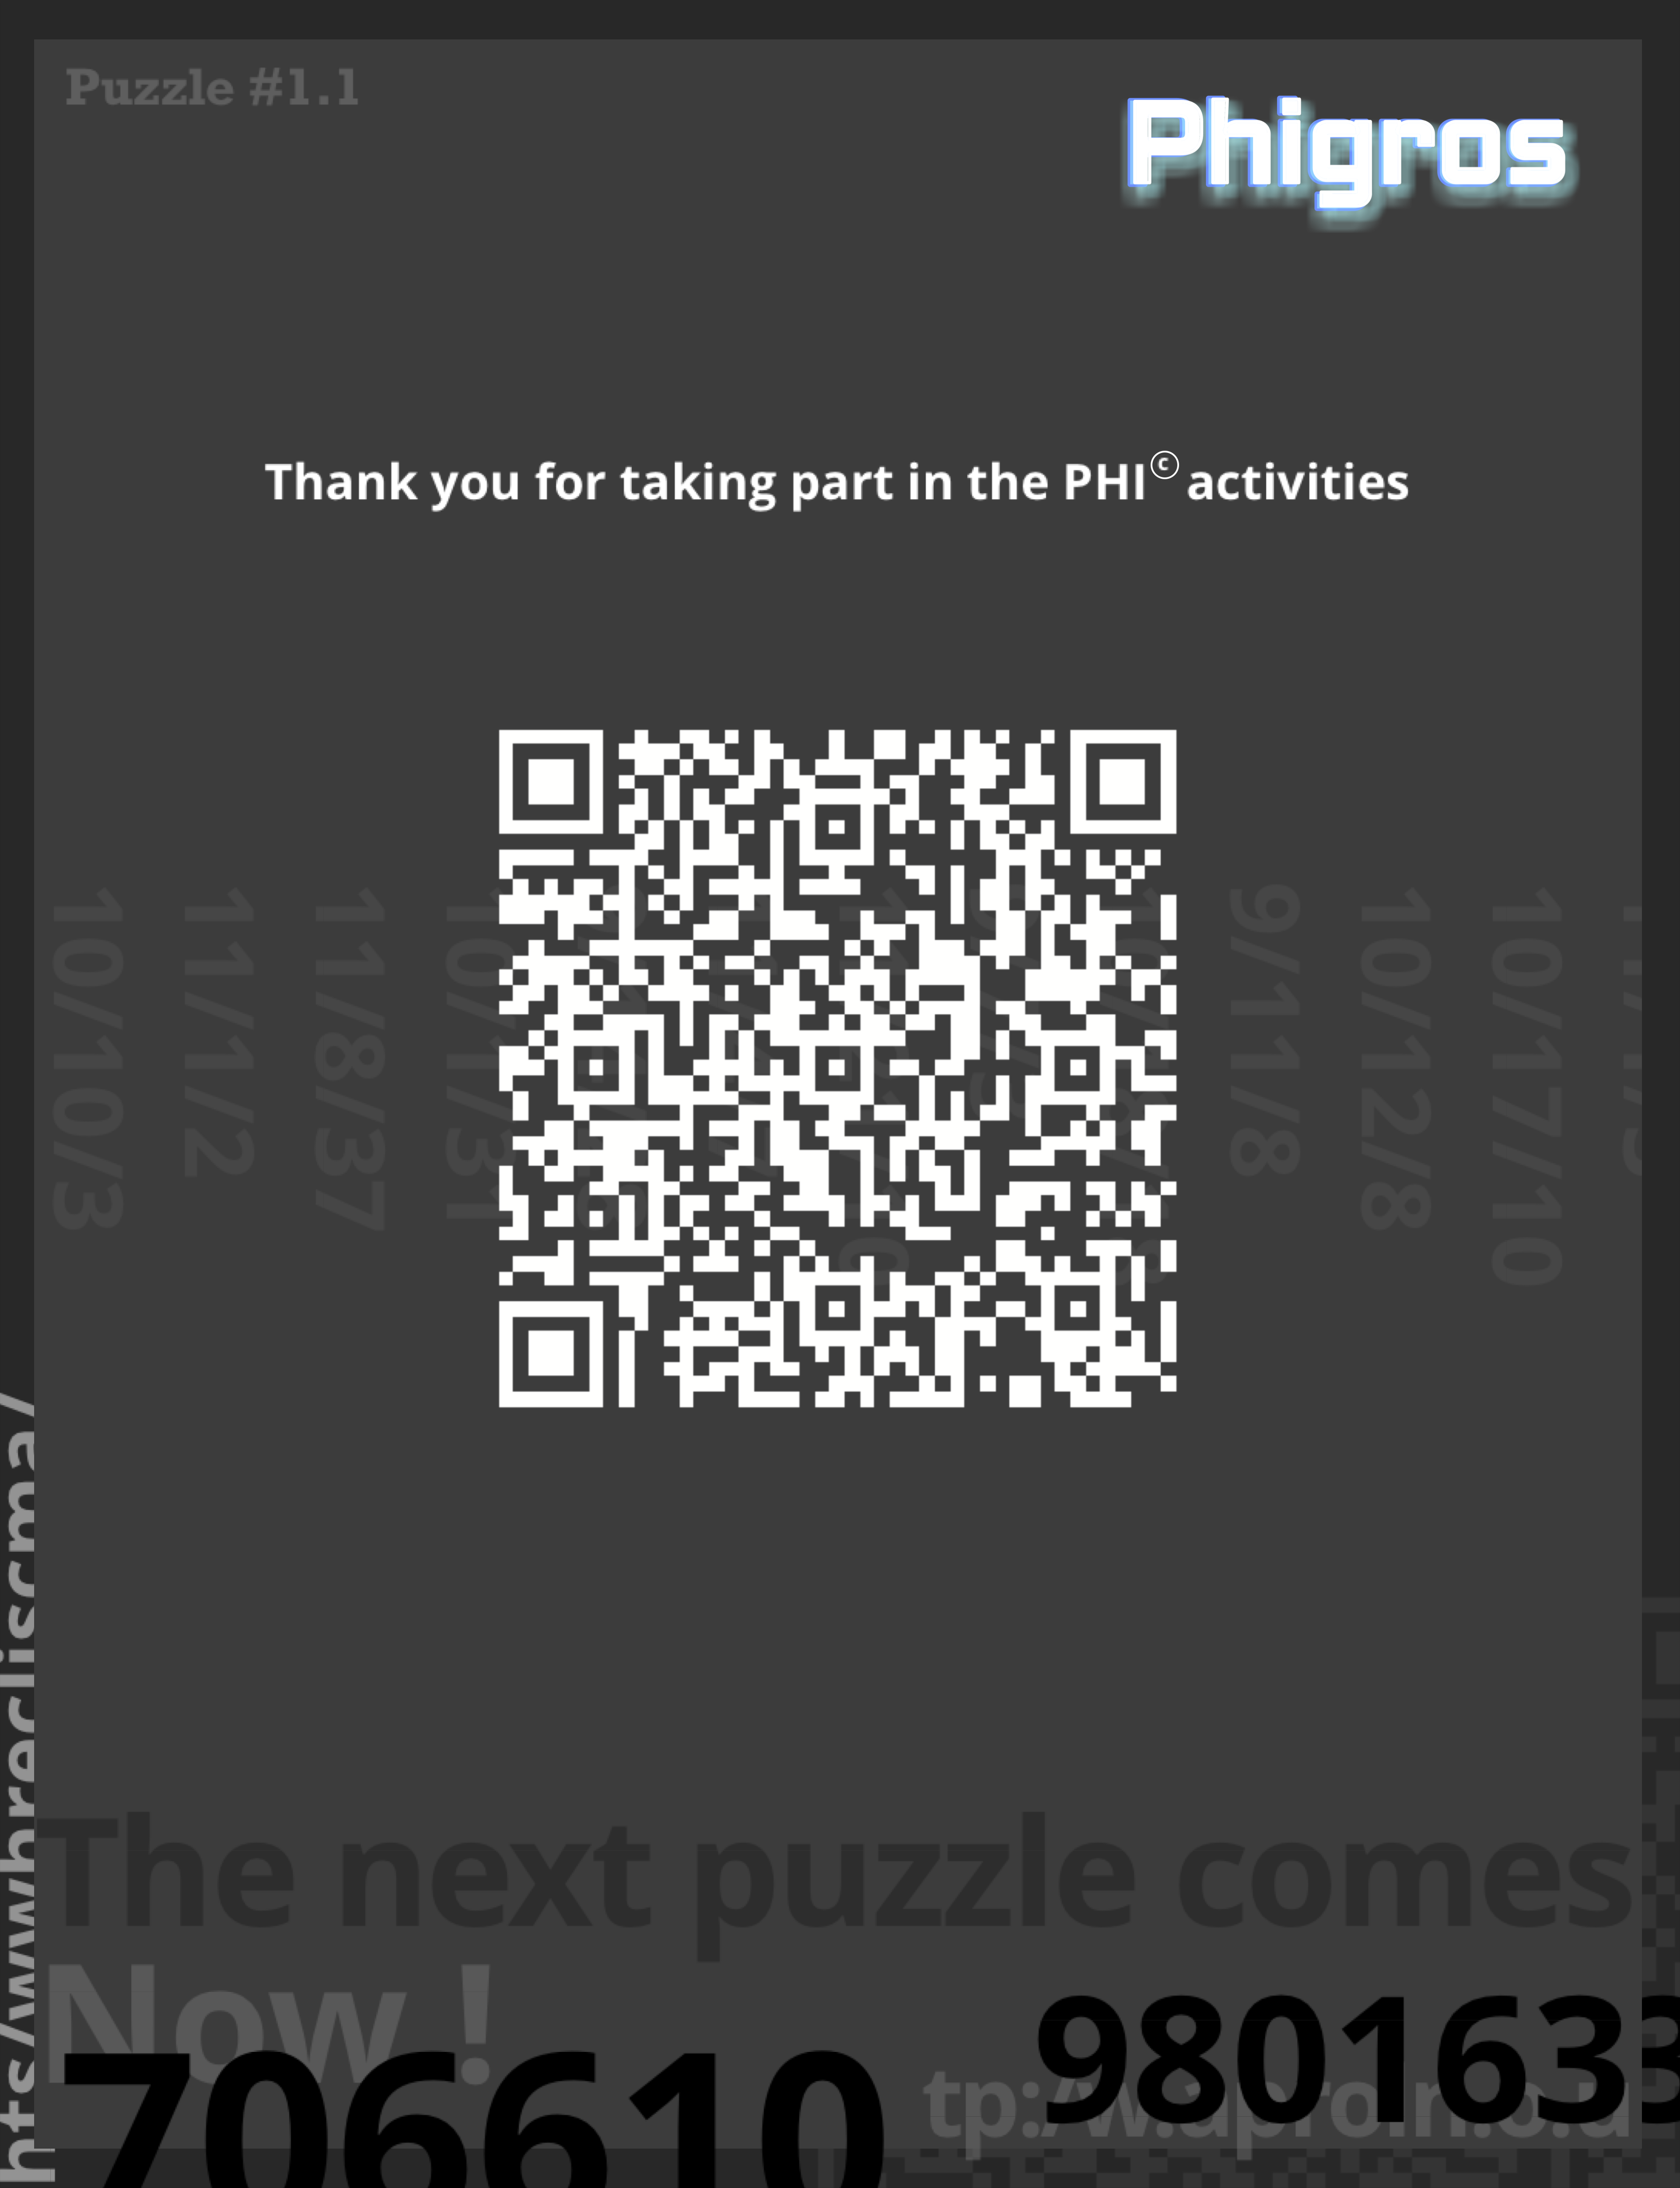 【Phigros】十七的宝藏 Puzzle #1.1谜题解密及补充 - 第1张